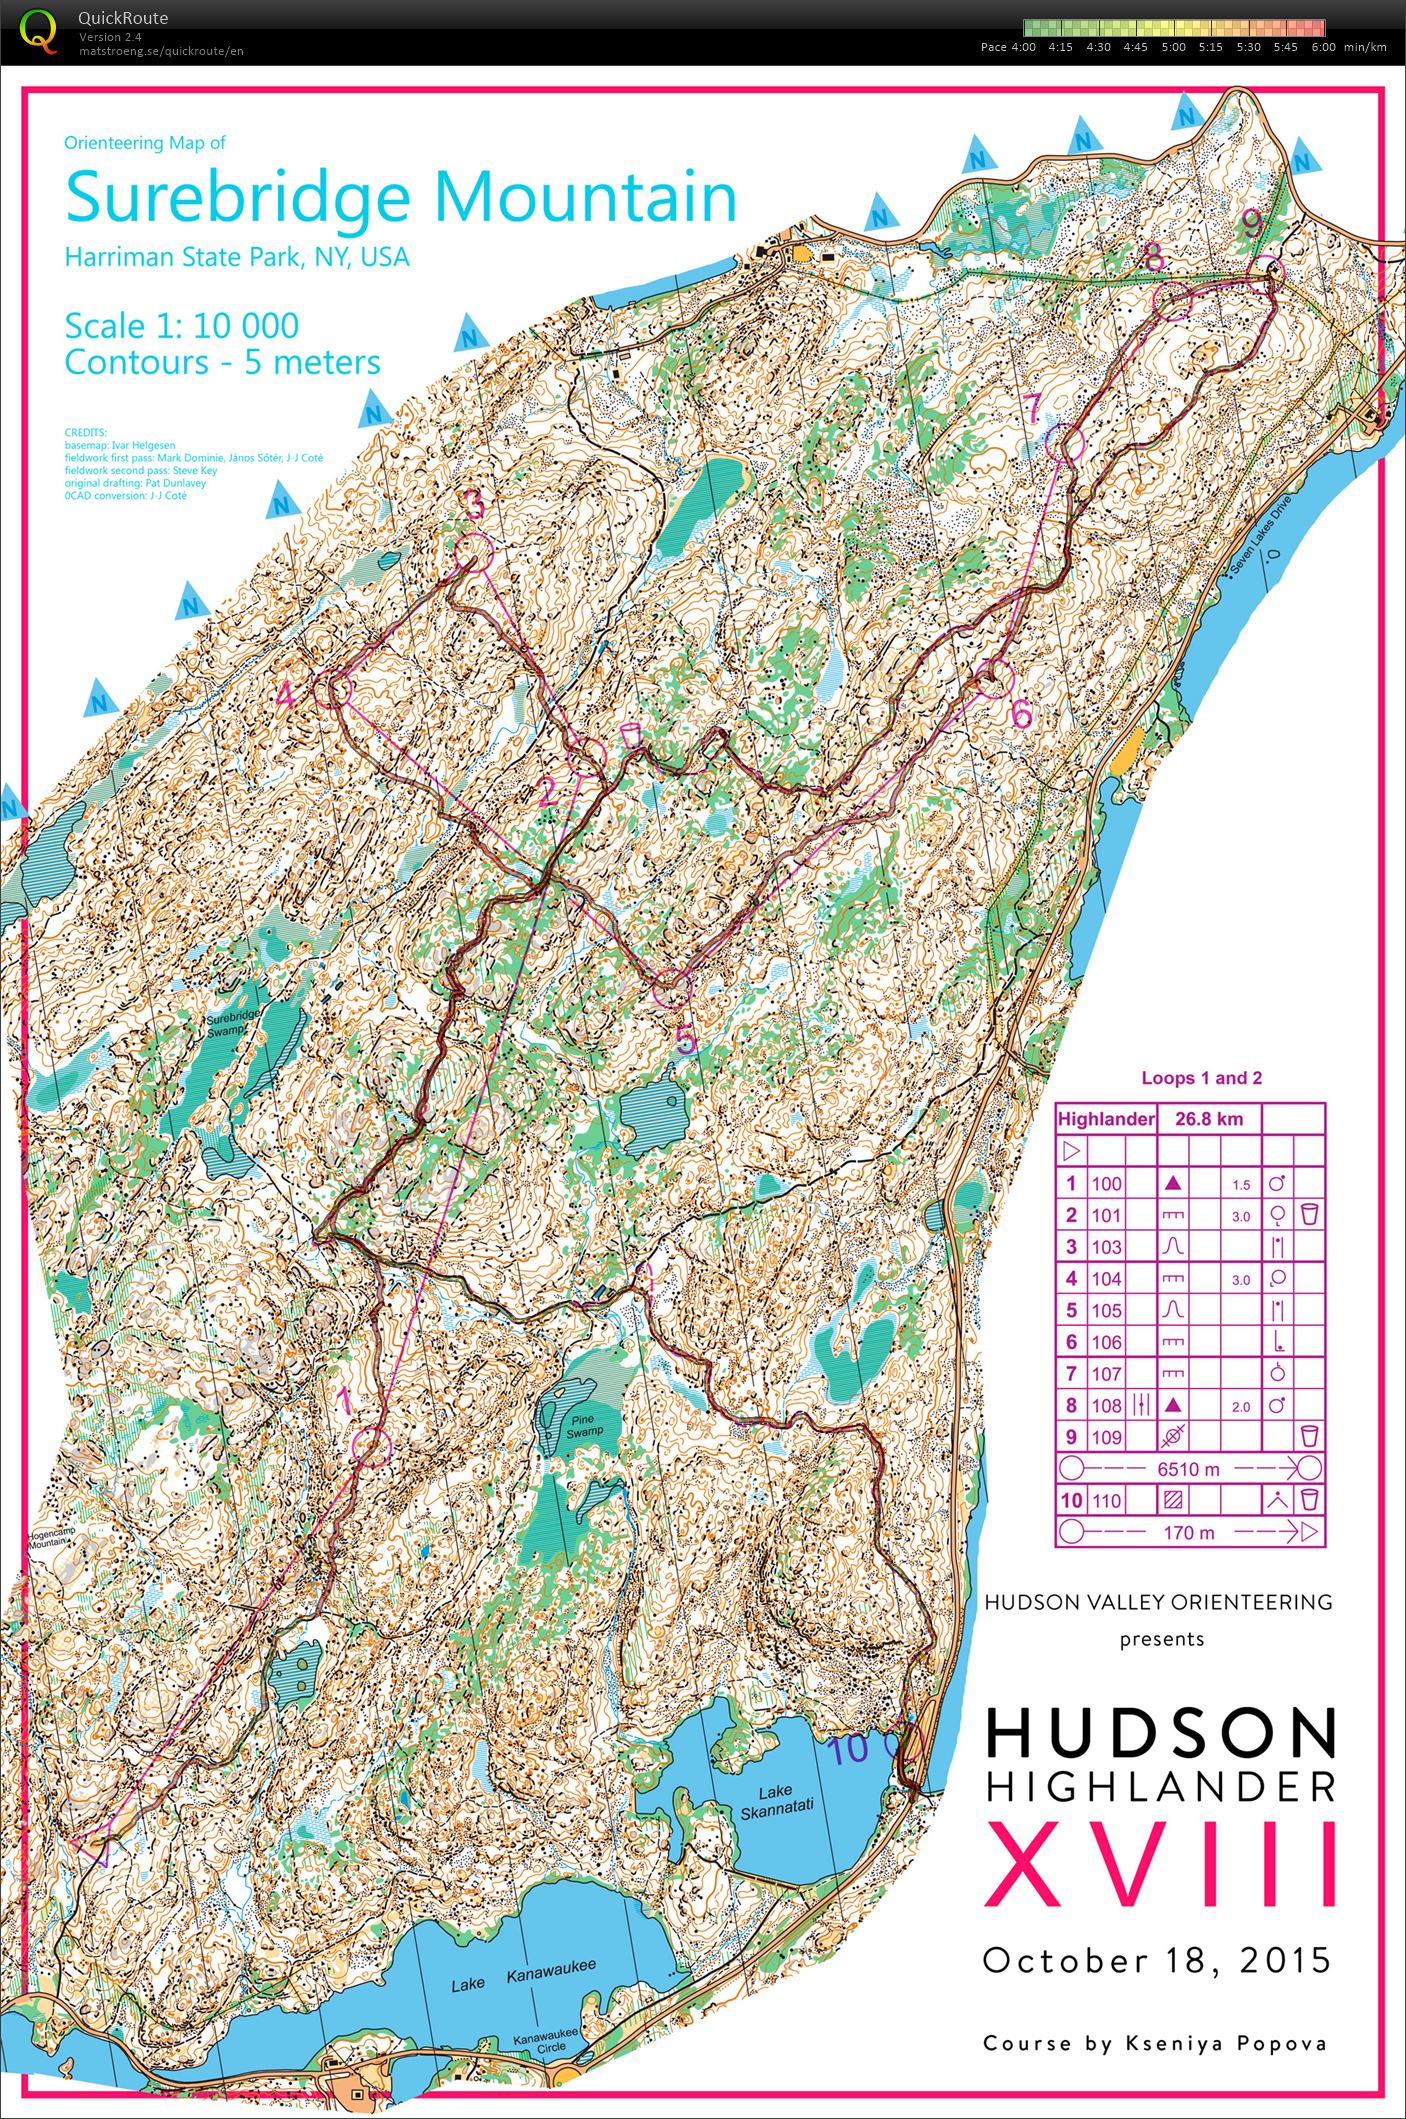 Hudson Highlander Loop 1 and Trail run (2015-10-18)